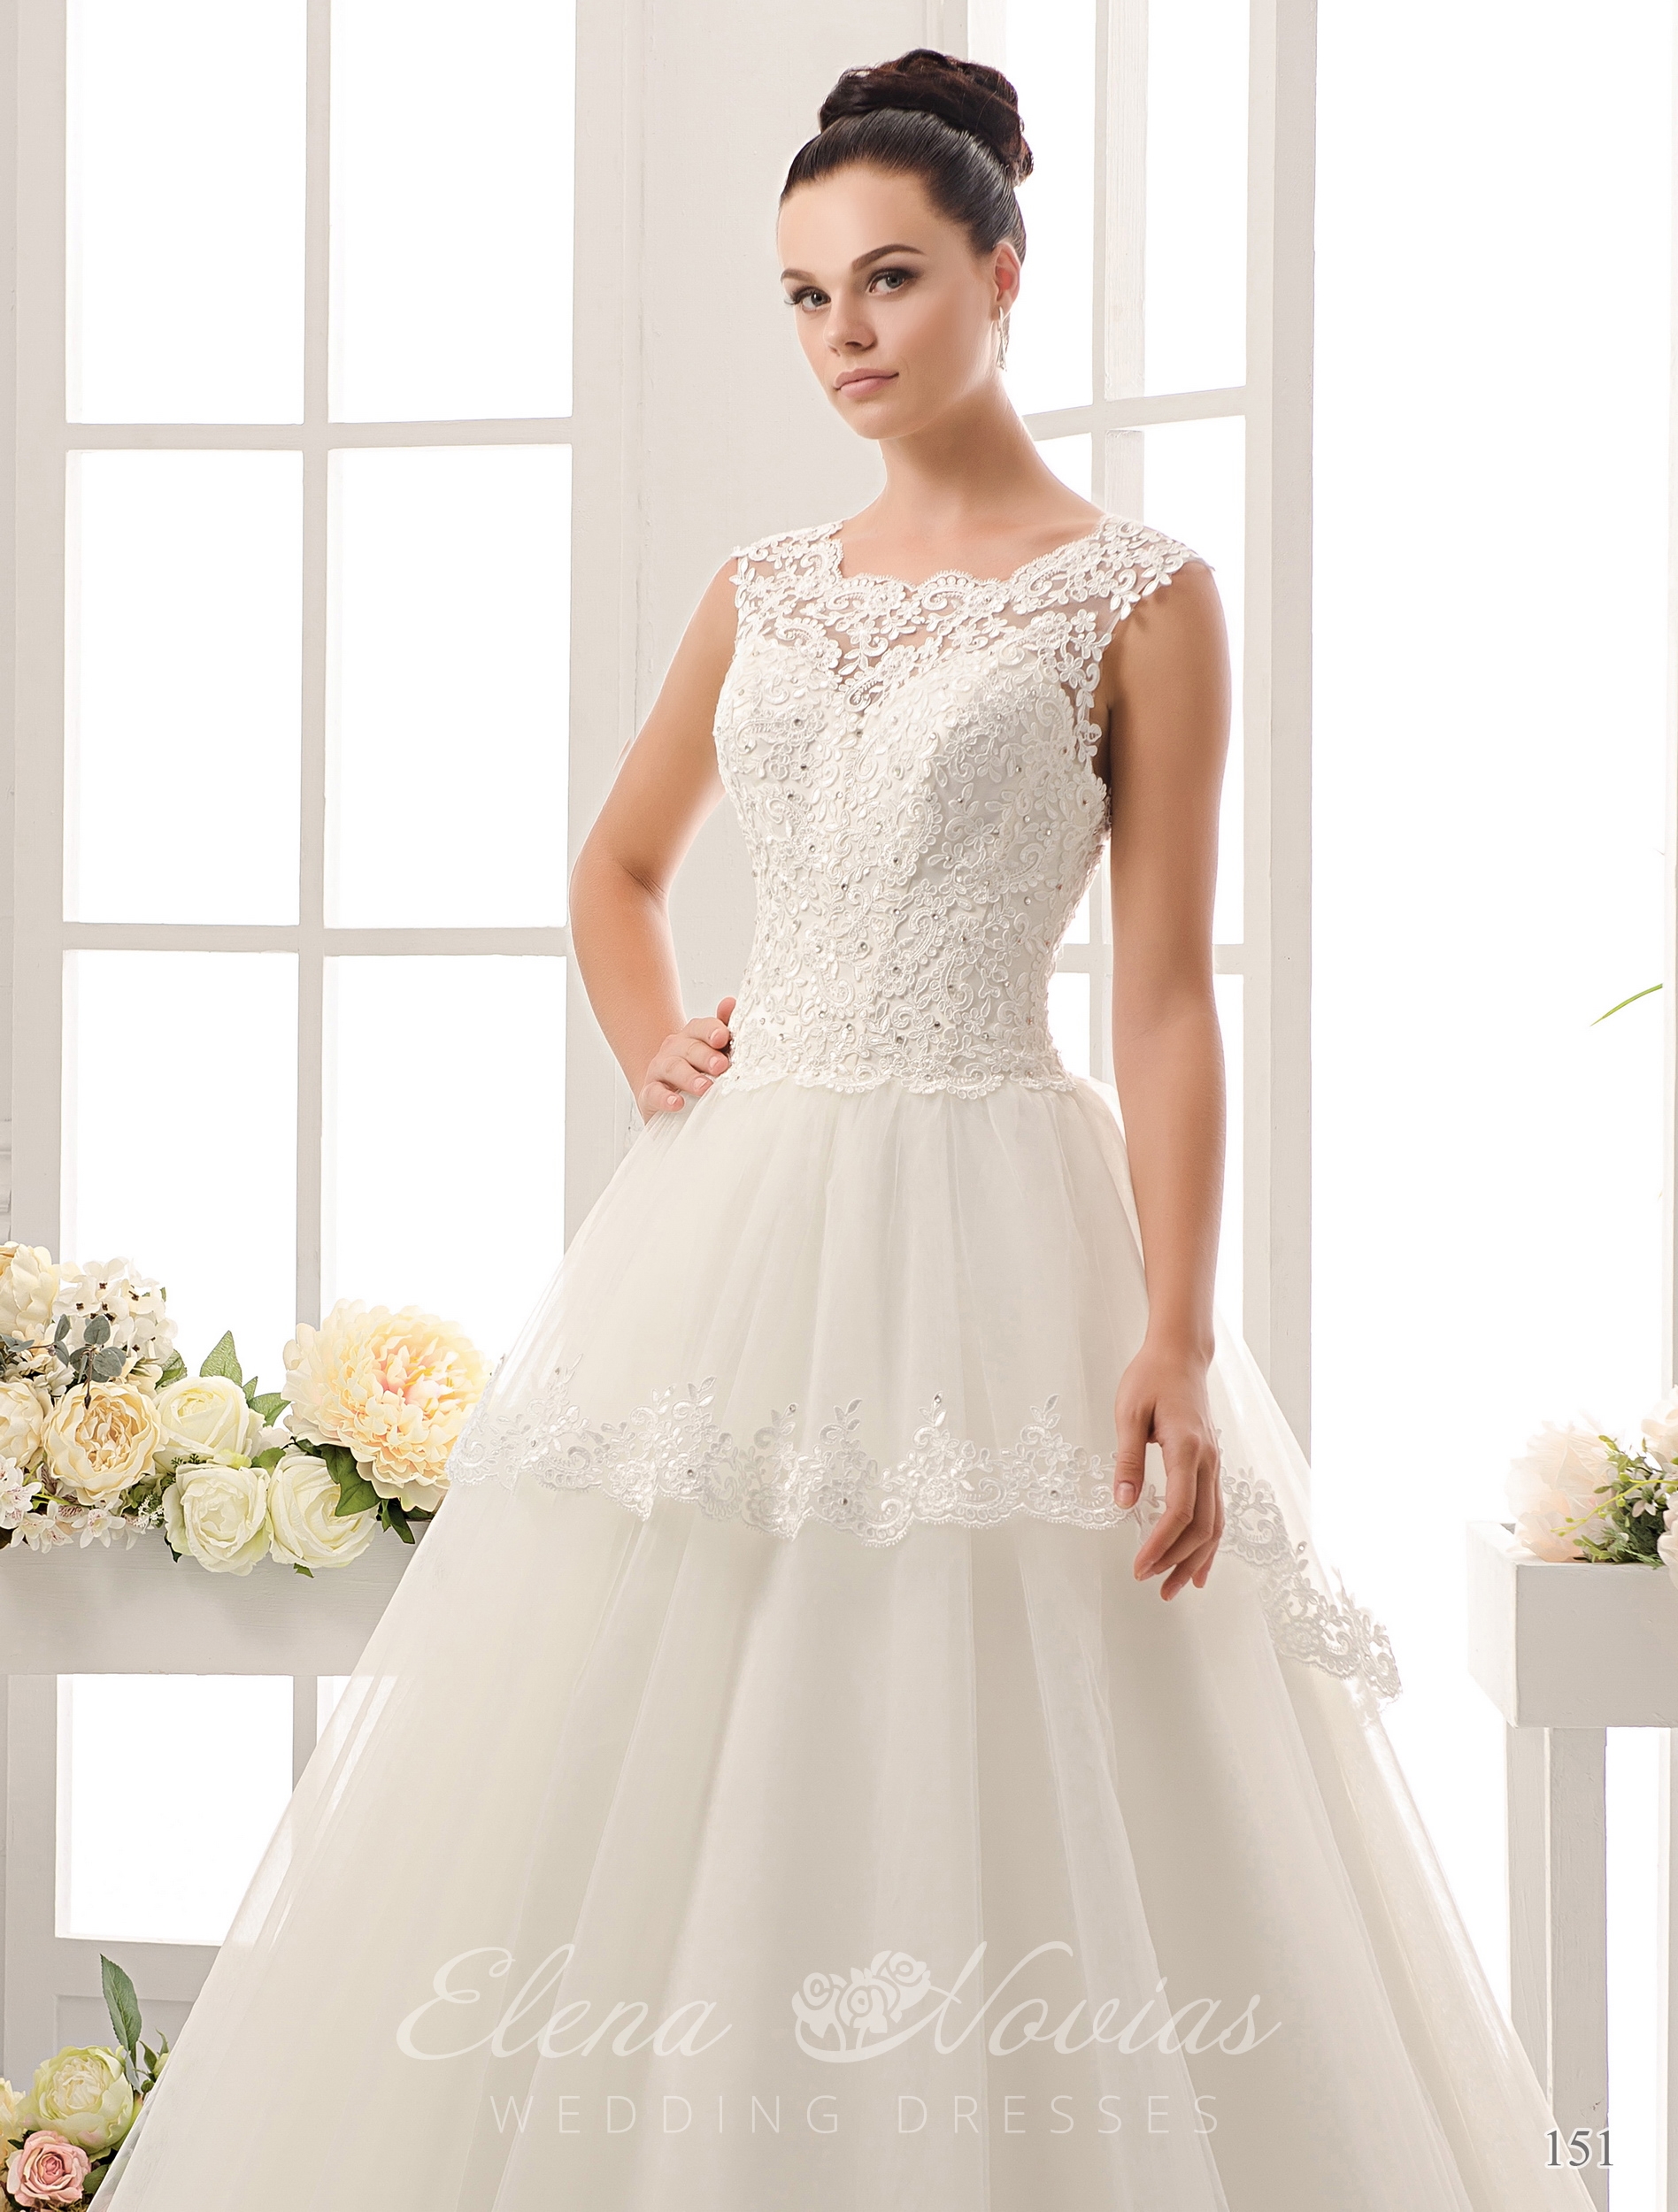 Wedding dresses 151 1